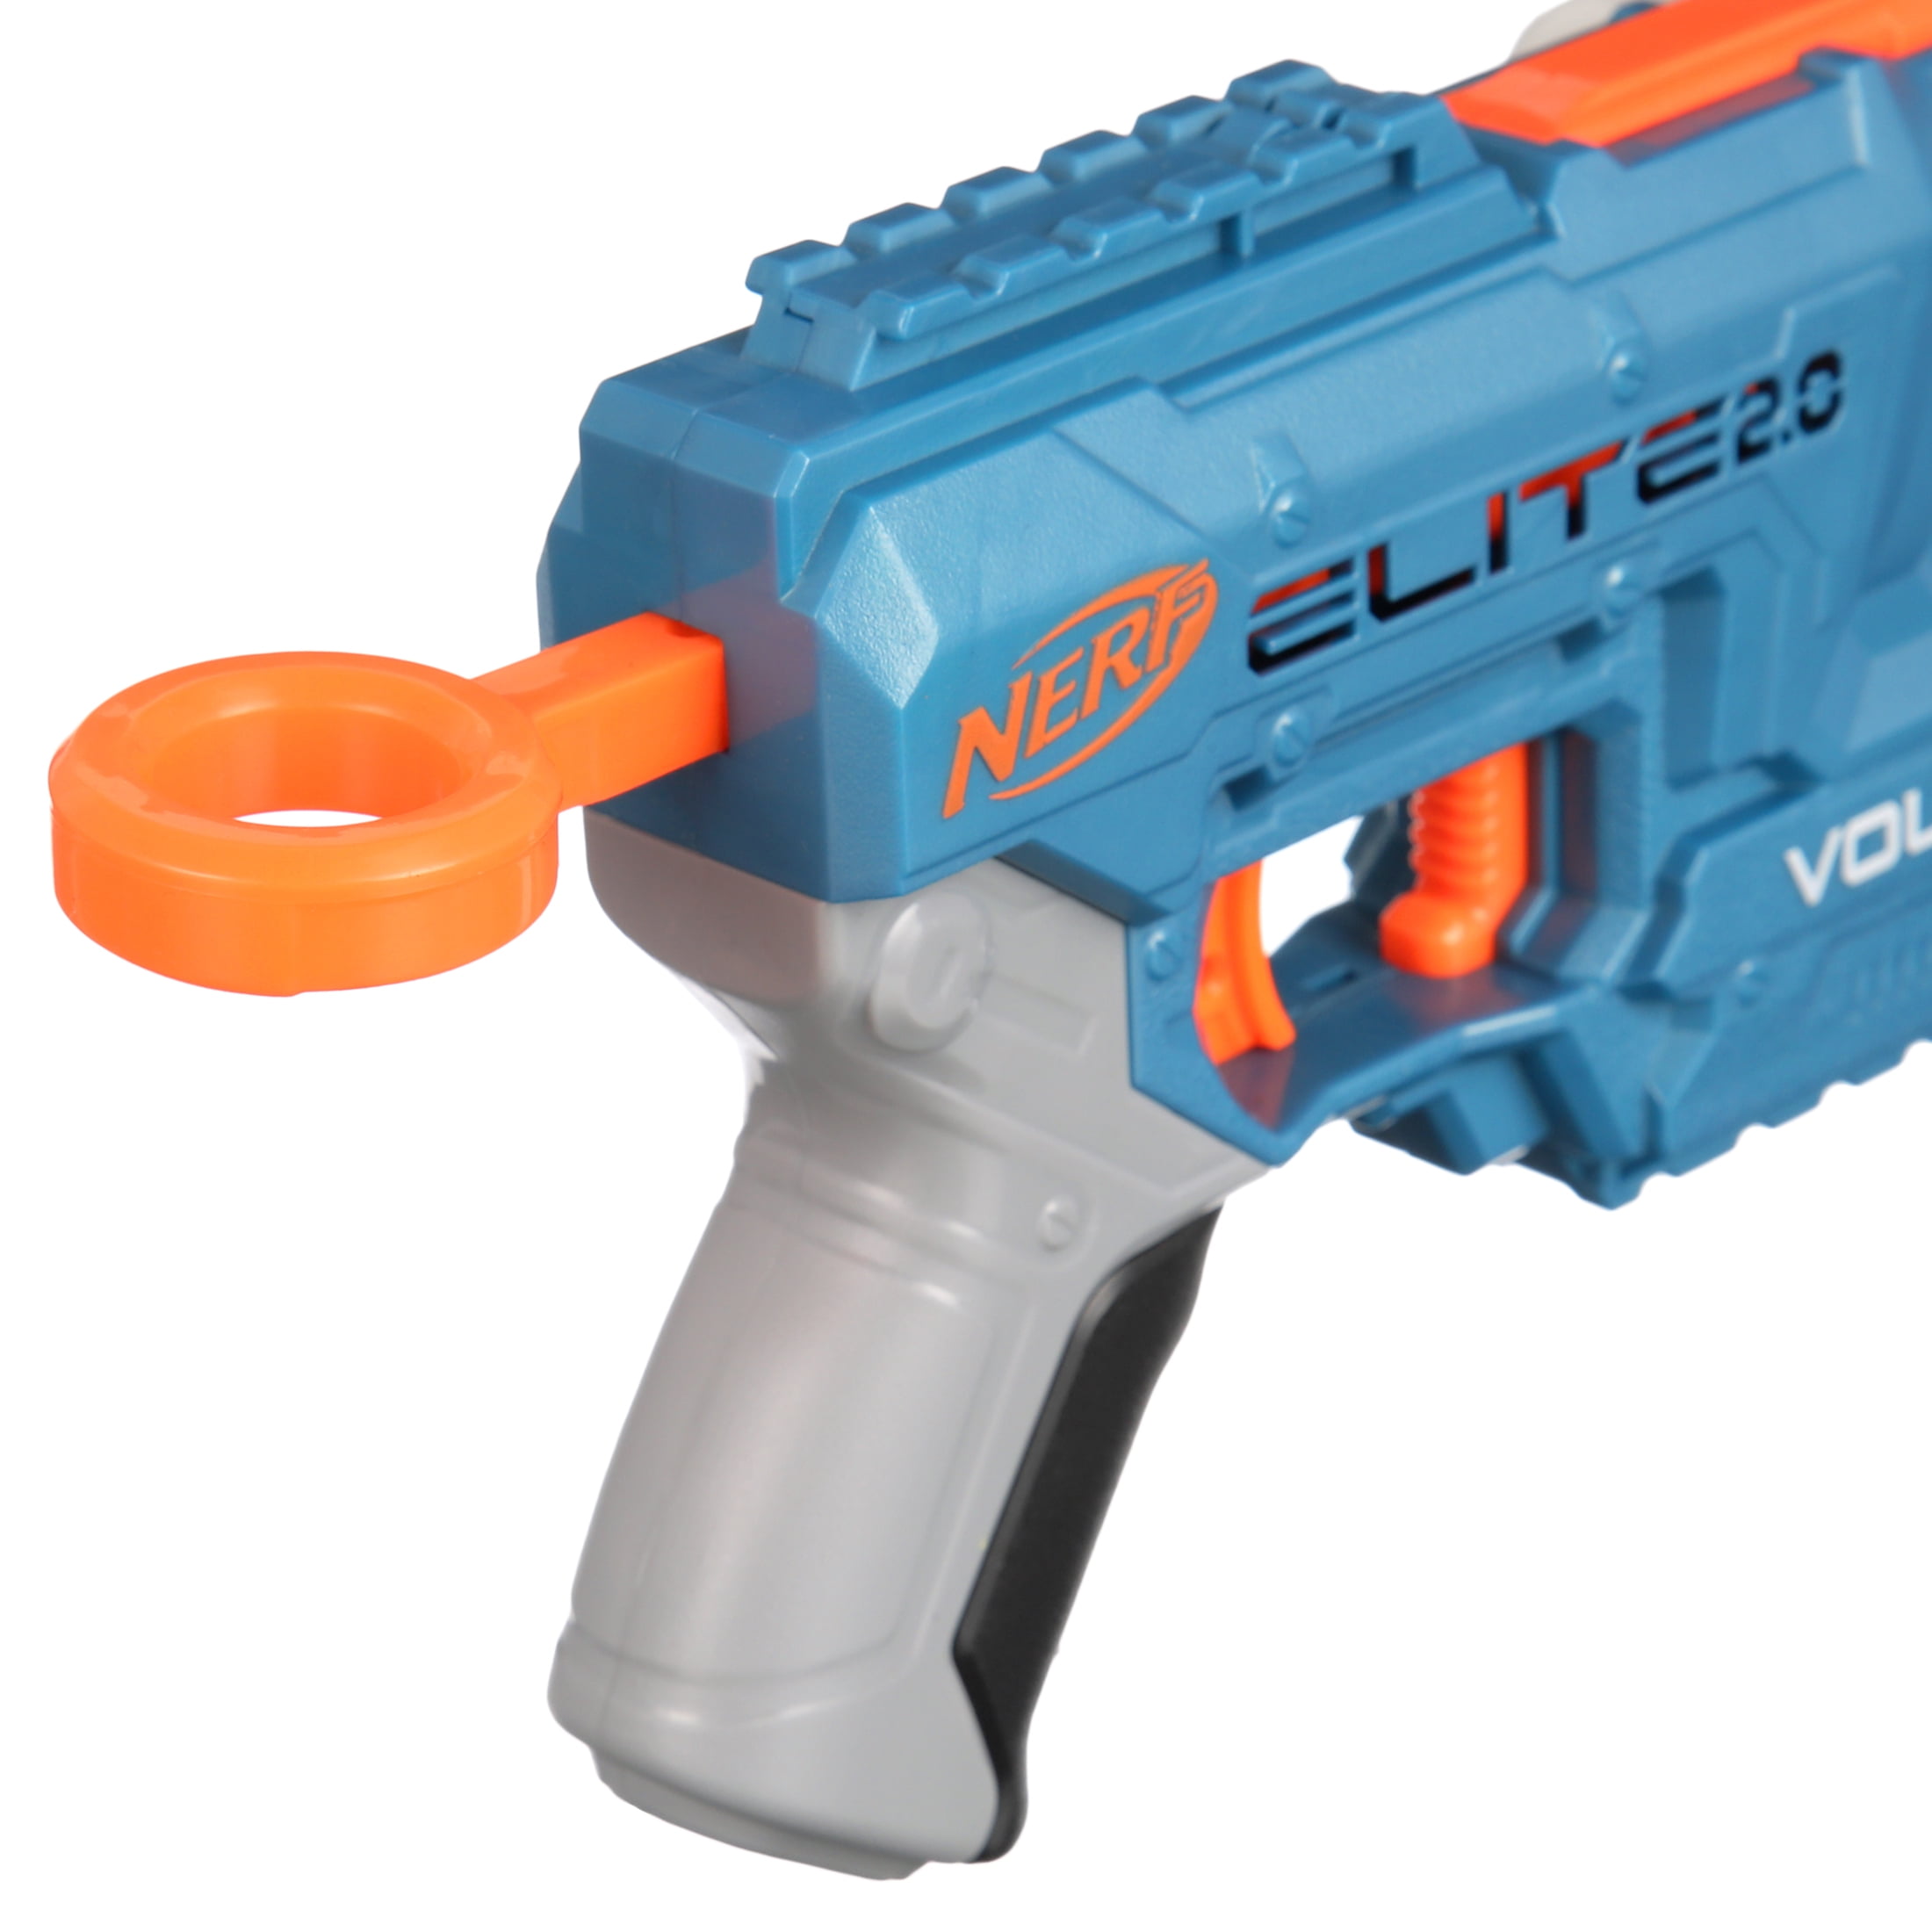 Arma De Brinquedo Nerf Elite 2.0 VOLT SD-1 - Tem Tem Digital